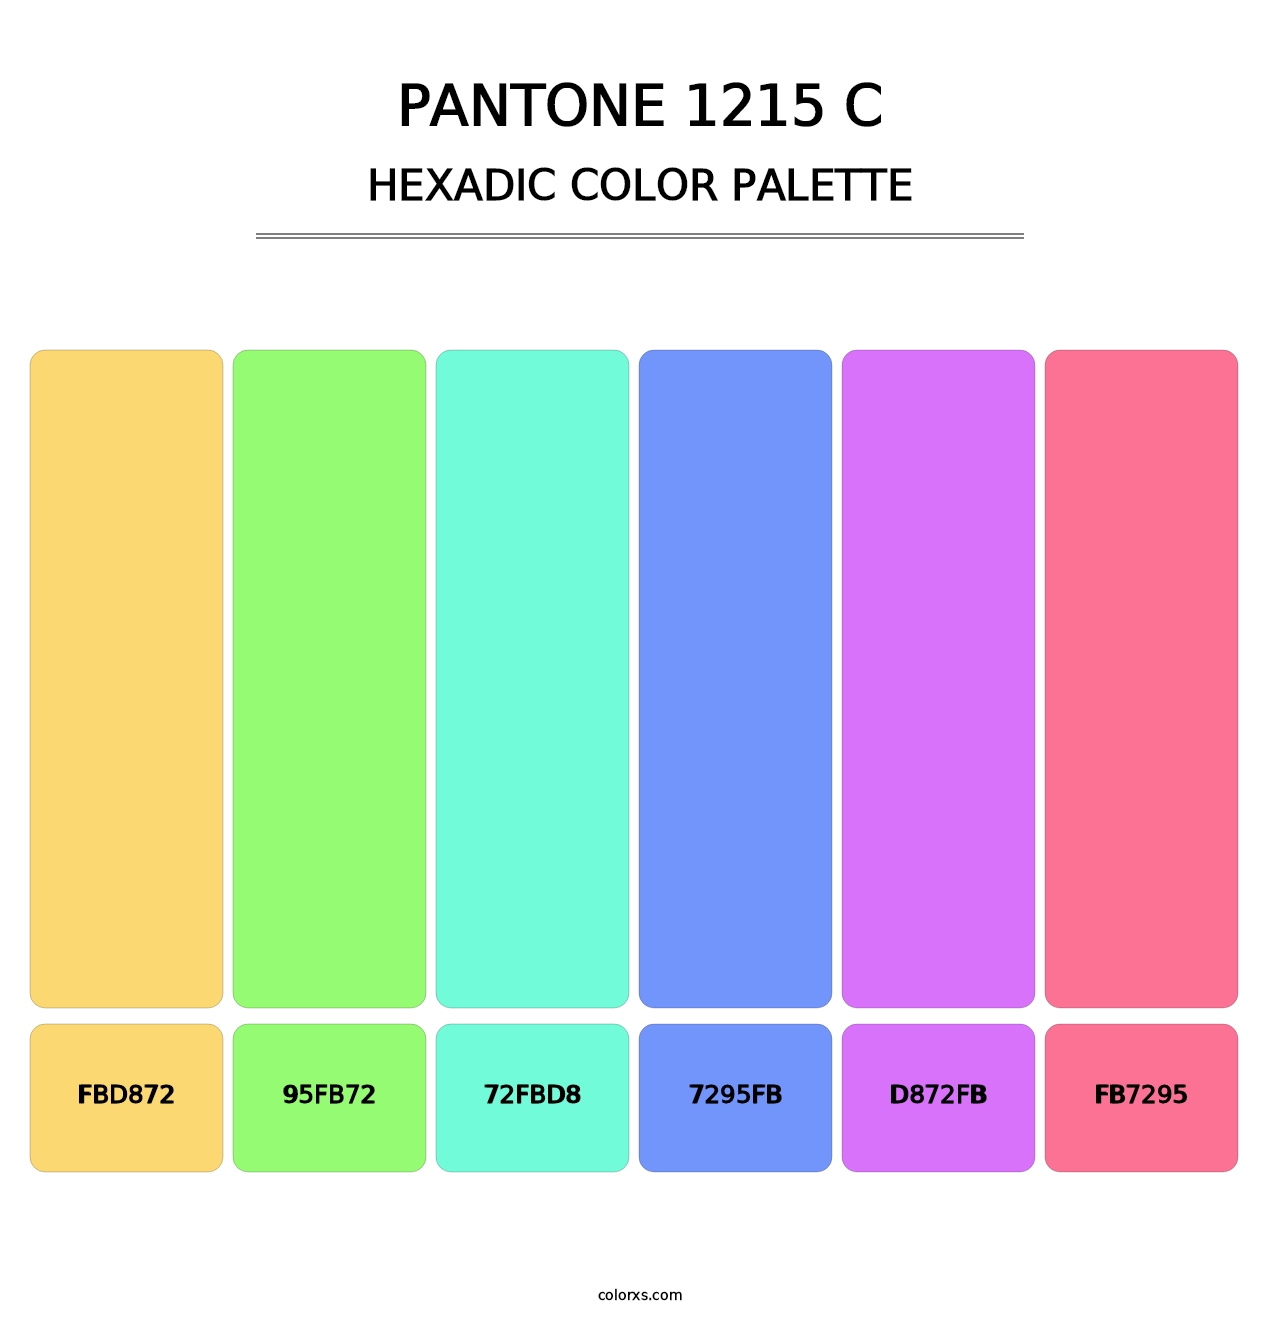 PANTONE 1215 C - Hexadic Color Palette